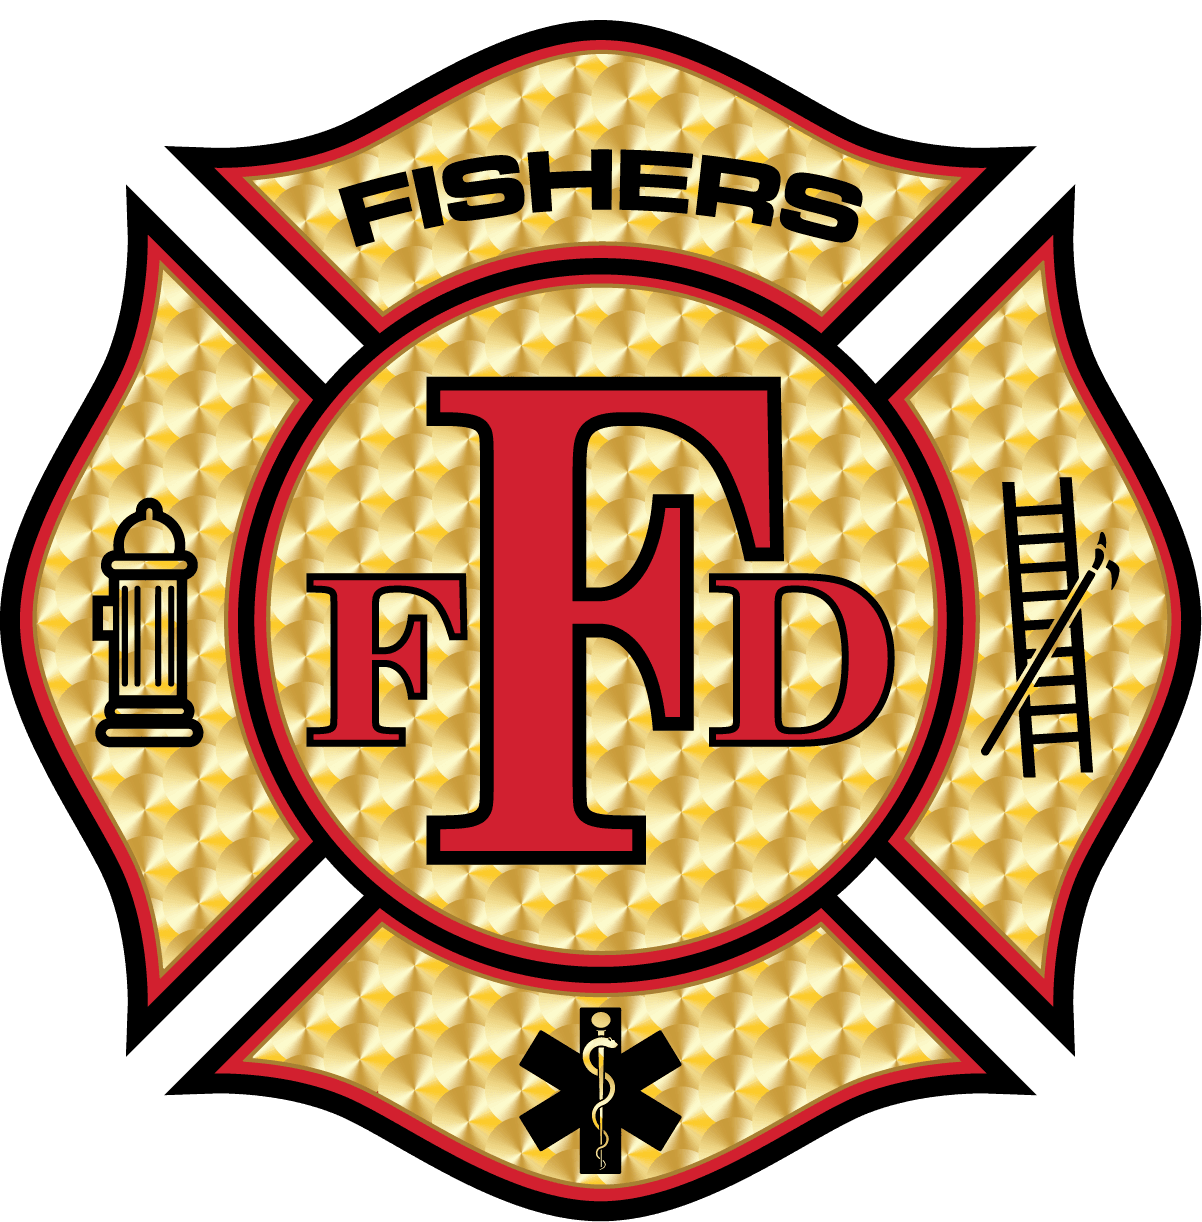 Firemen Logo - Fishers Fire Department. Fishers, IN